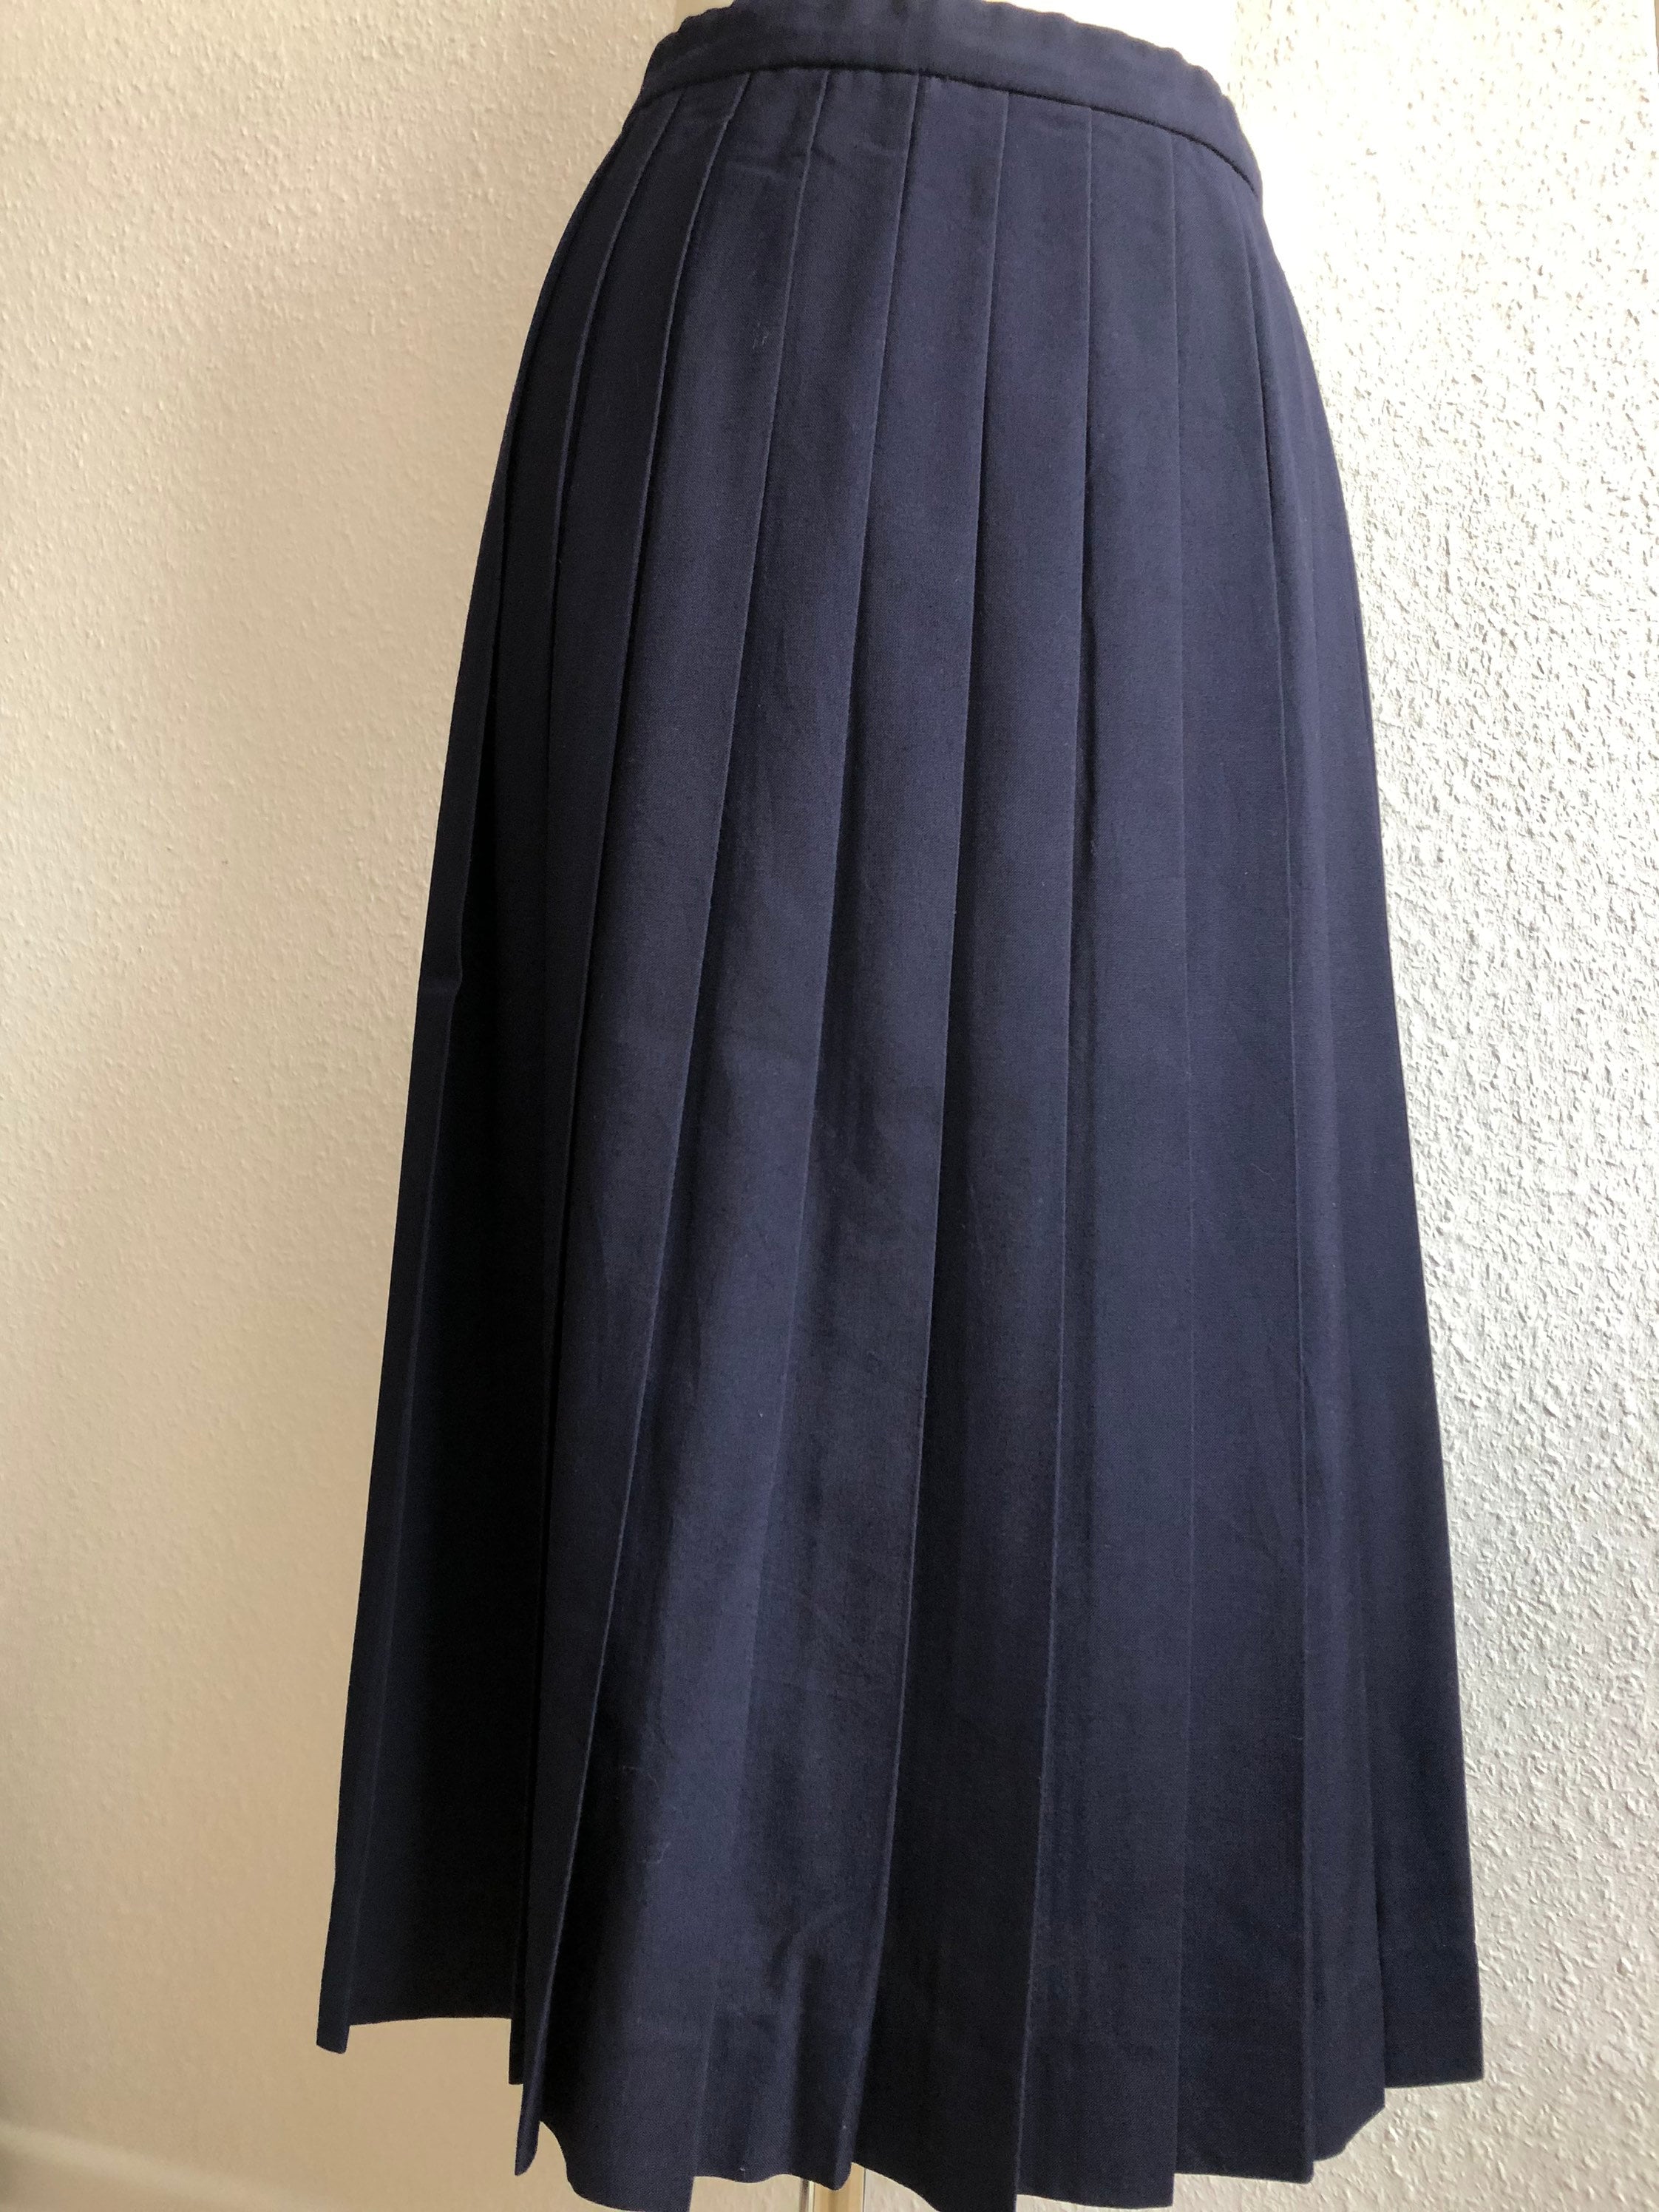 School uniform uniform 50% wool winter skirt in dark blue from | Etsy